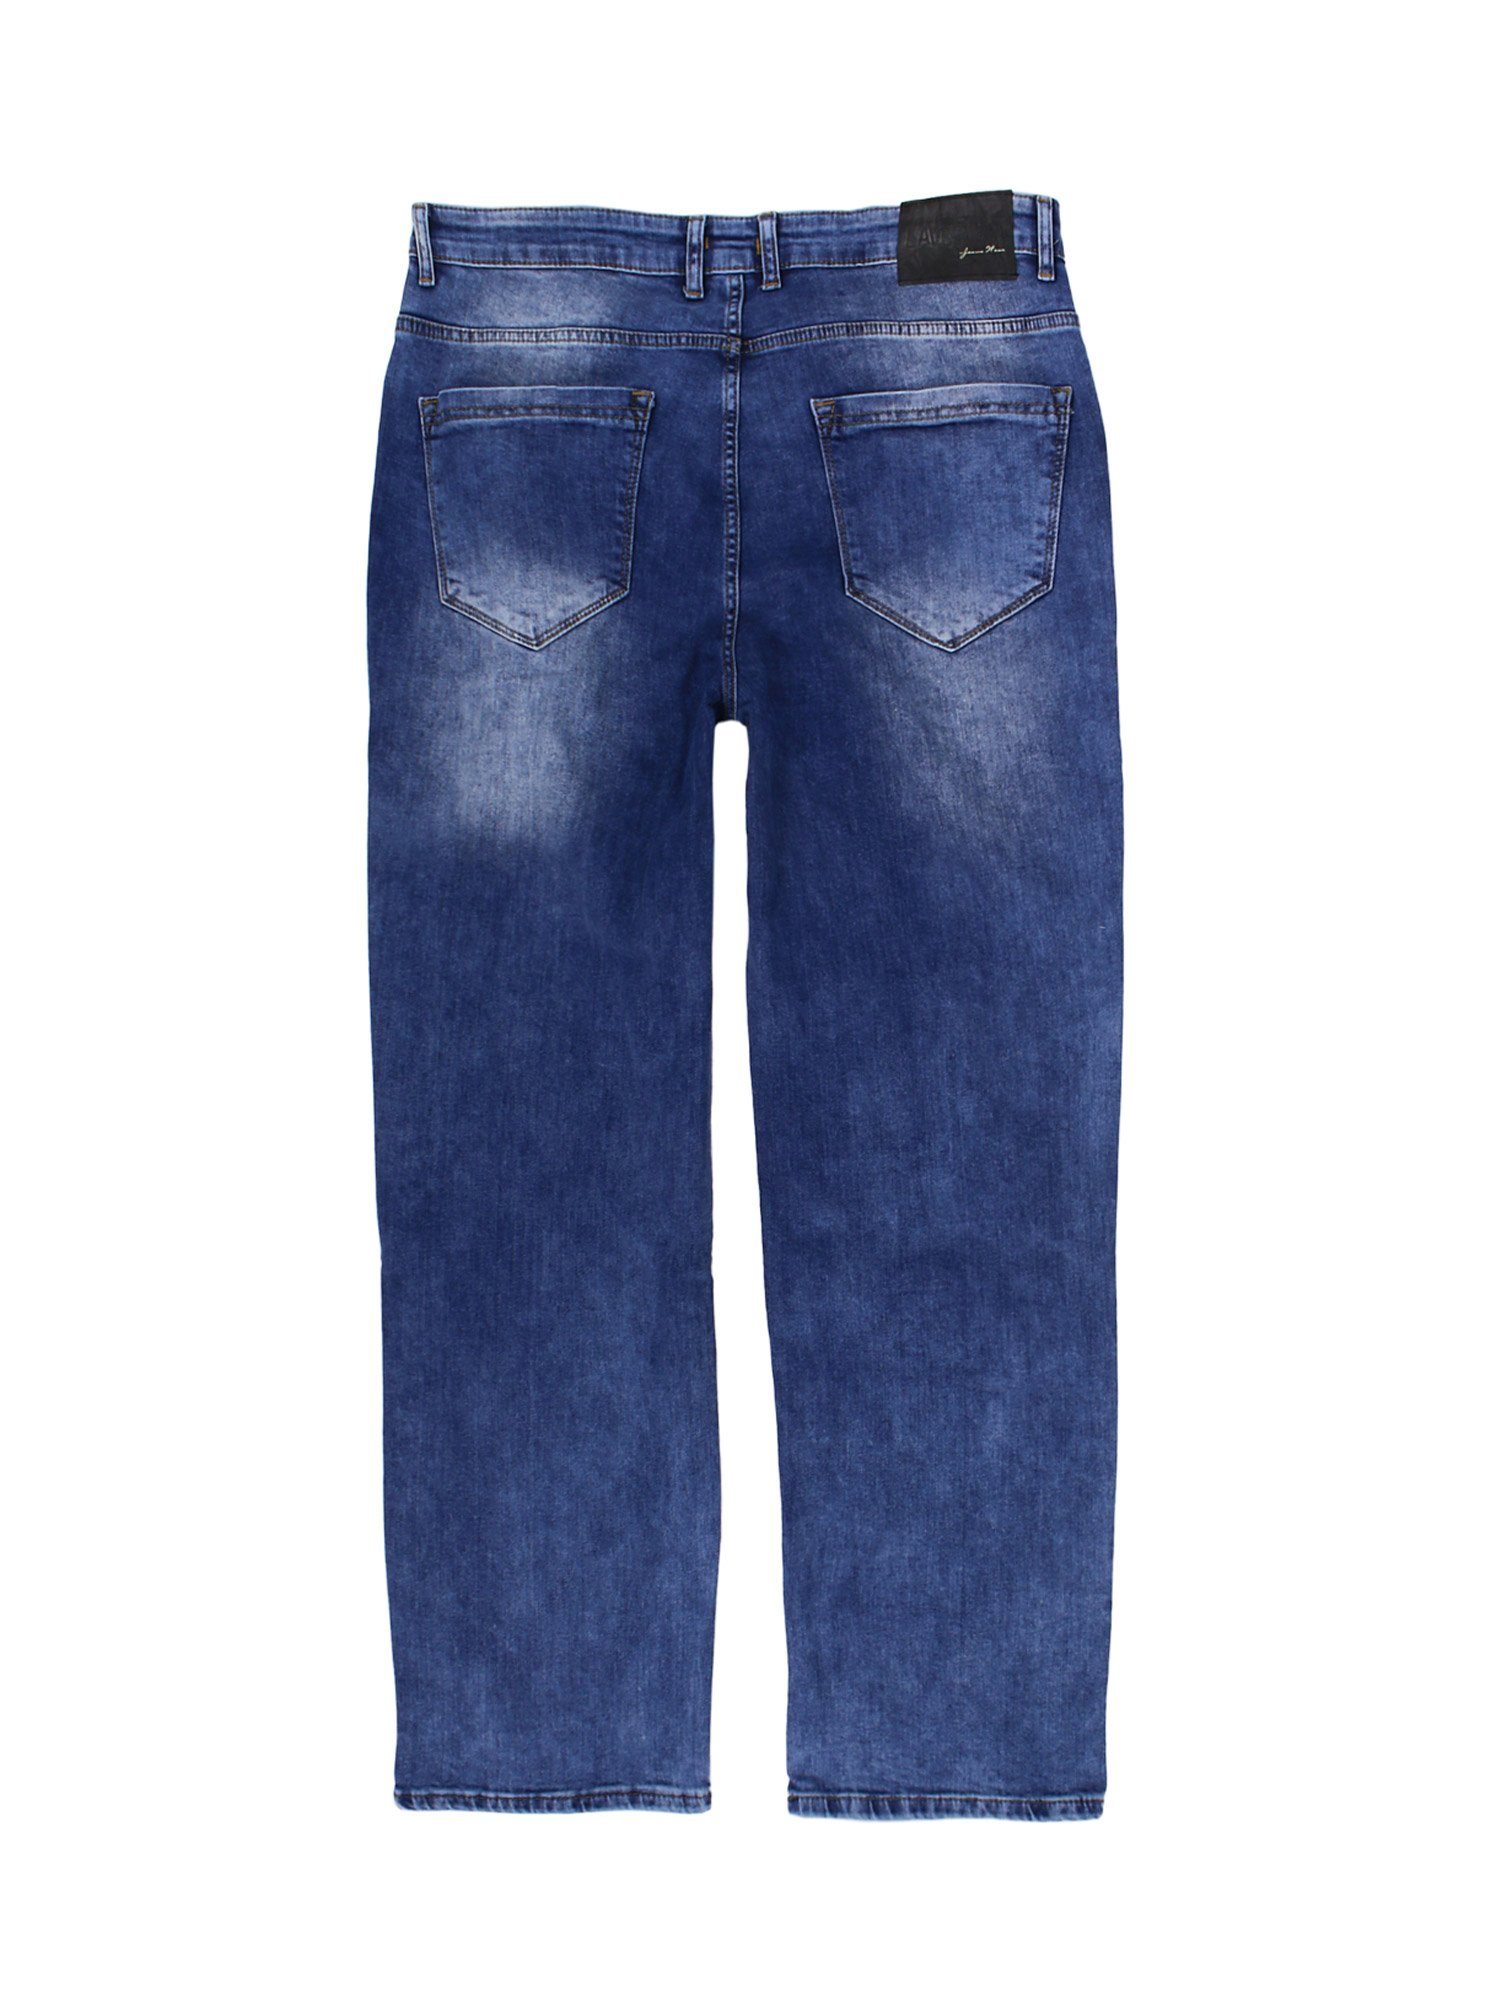 Elasthan Herren Jeanshose stoneblau Lavecchia mit Comfort-fit-Jeans Übergrößen LV-501 Stretch